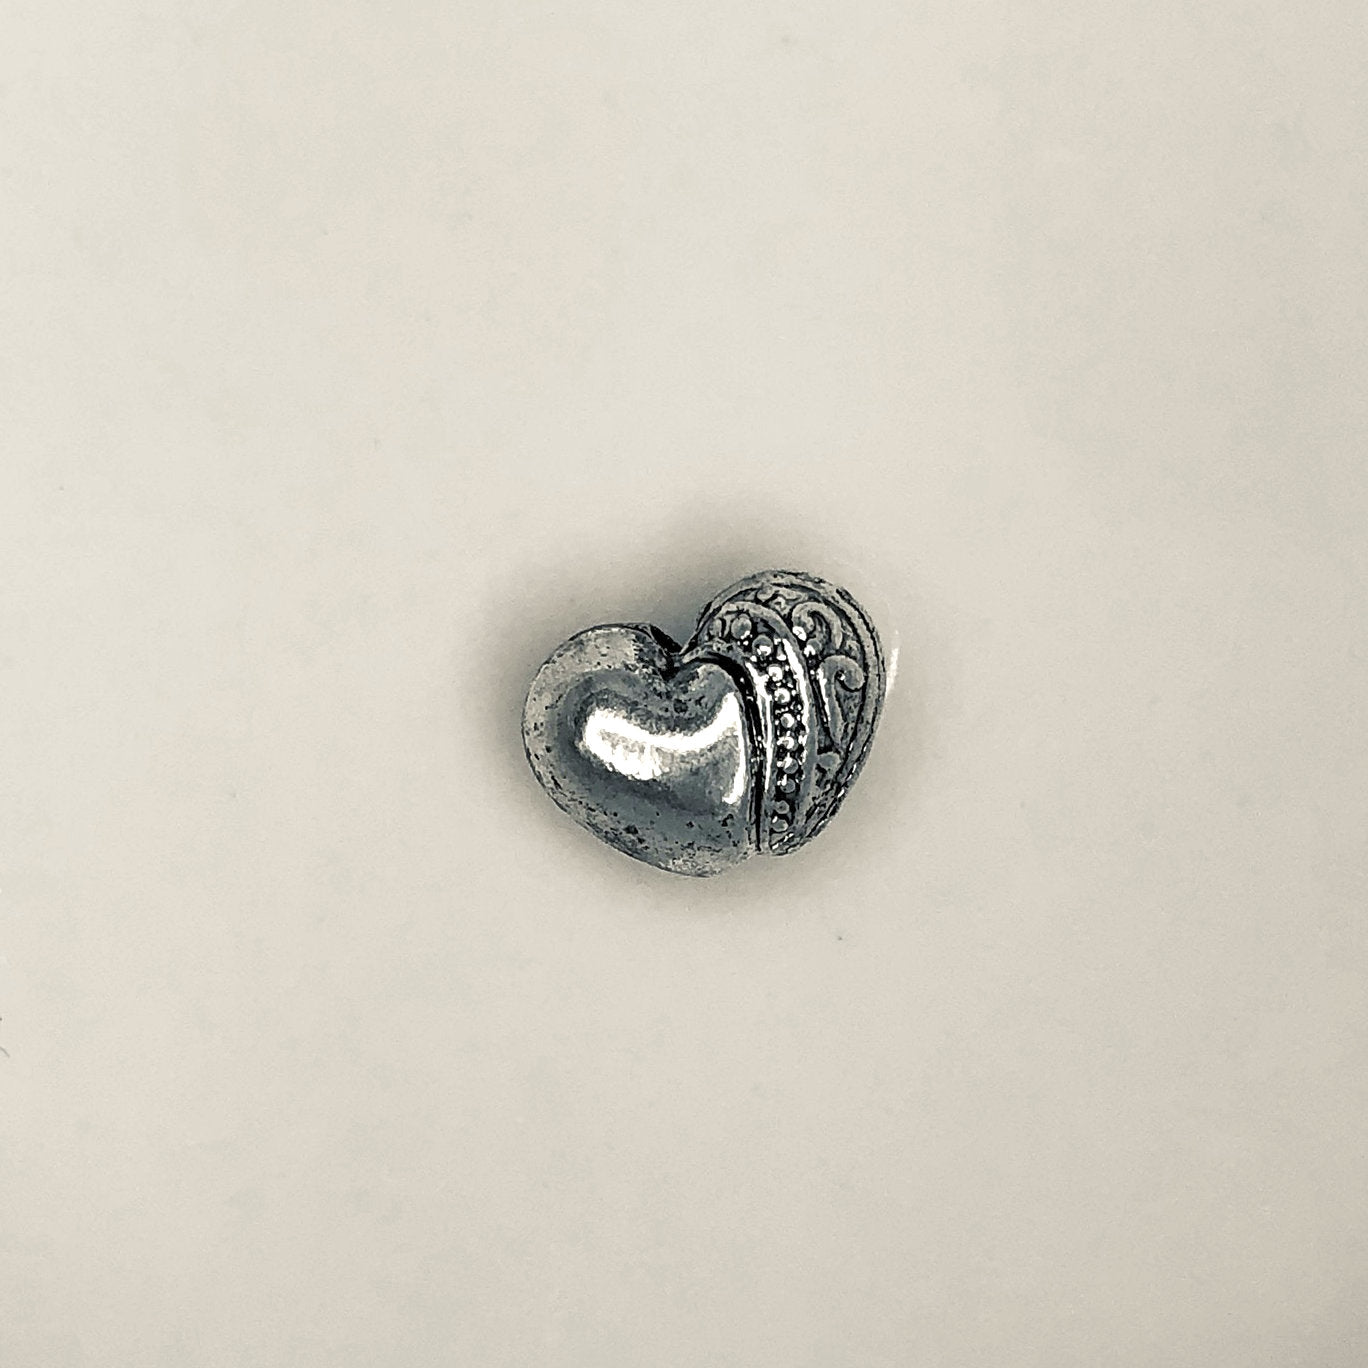 Antique Silver Puffed Designed Heart Metal Charm - 6 x 10 x 5 mm - 1 Charm